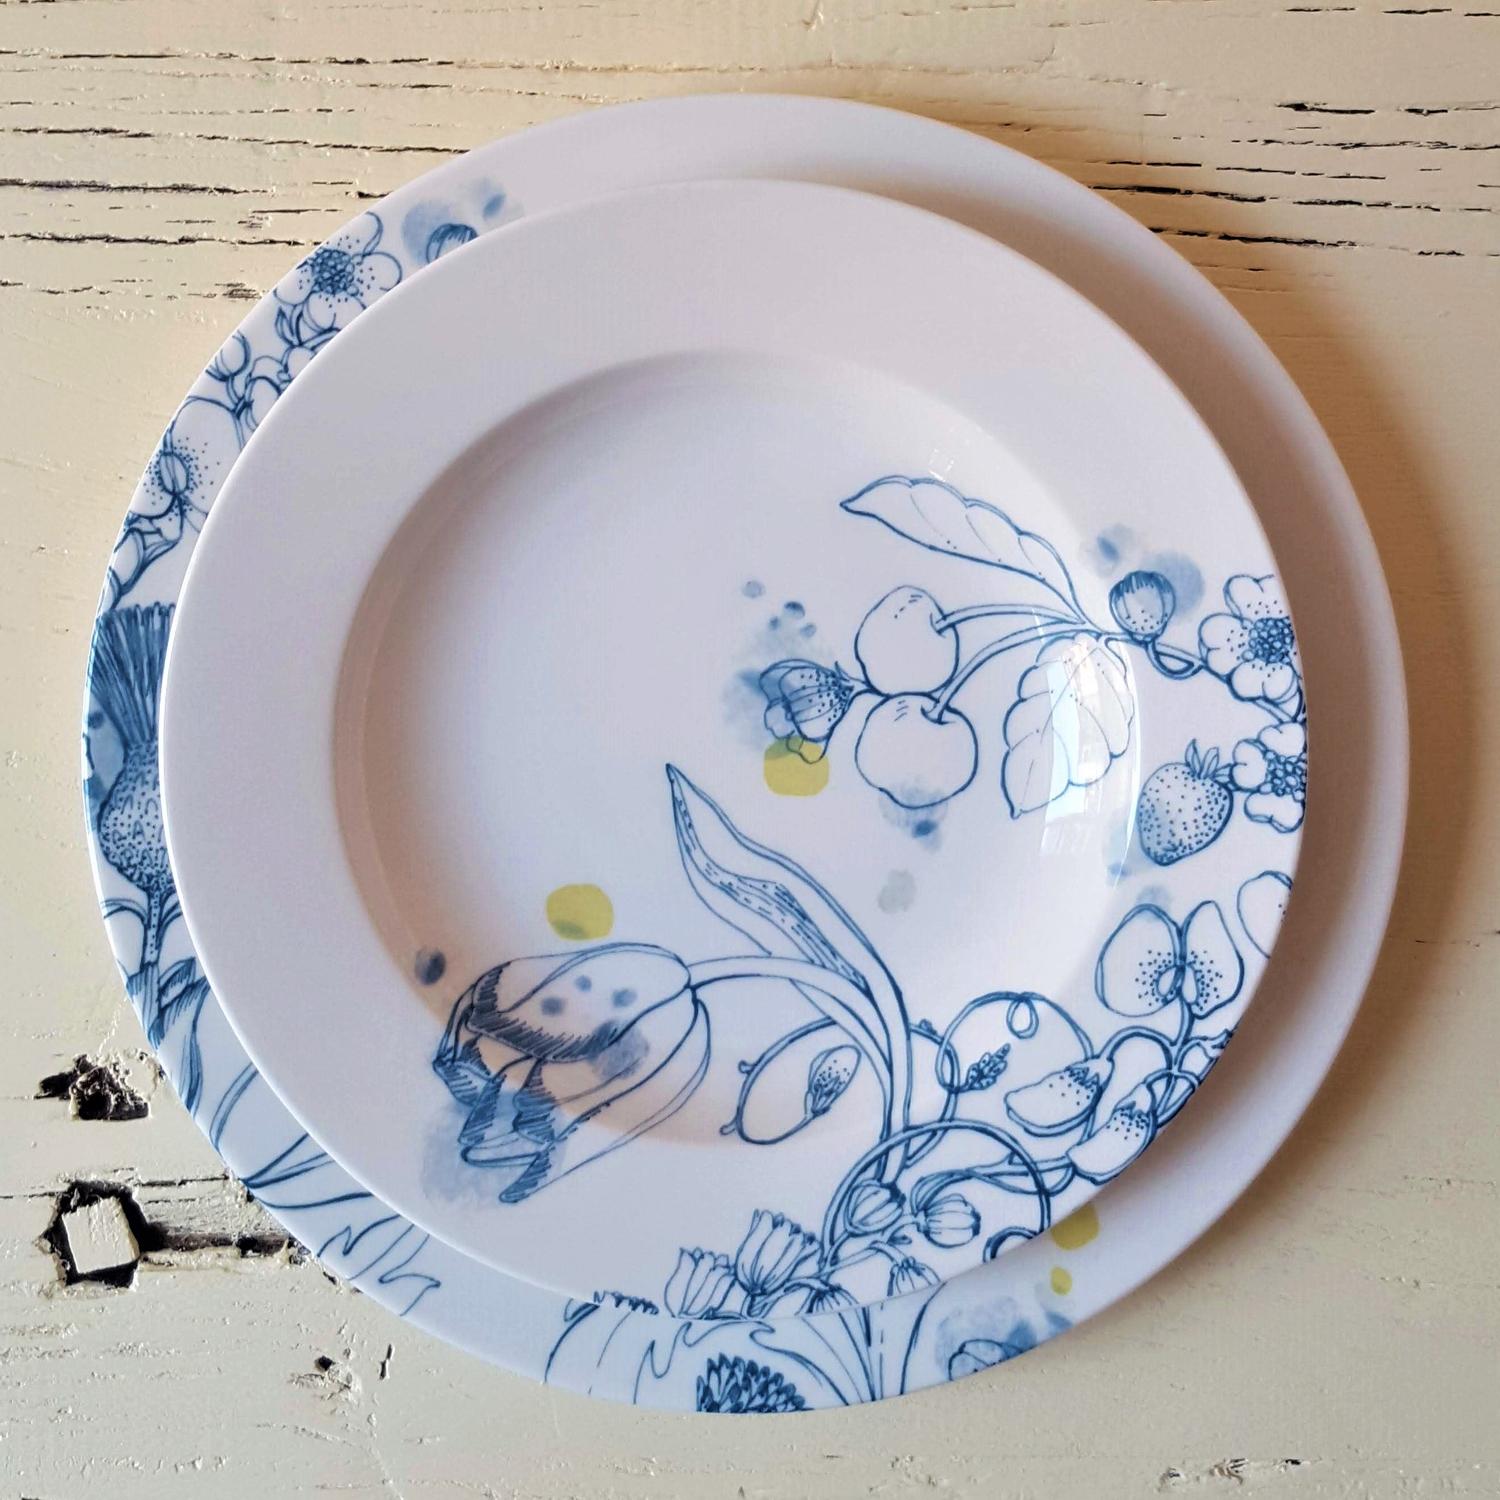 Other Blu Summer, Contemporary Porcelain Pasta Plates Set with Blue Floral Design For Sale